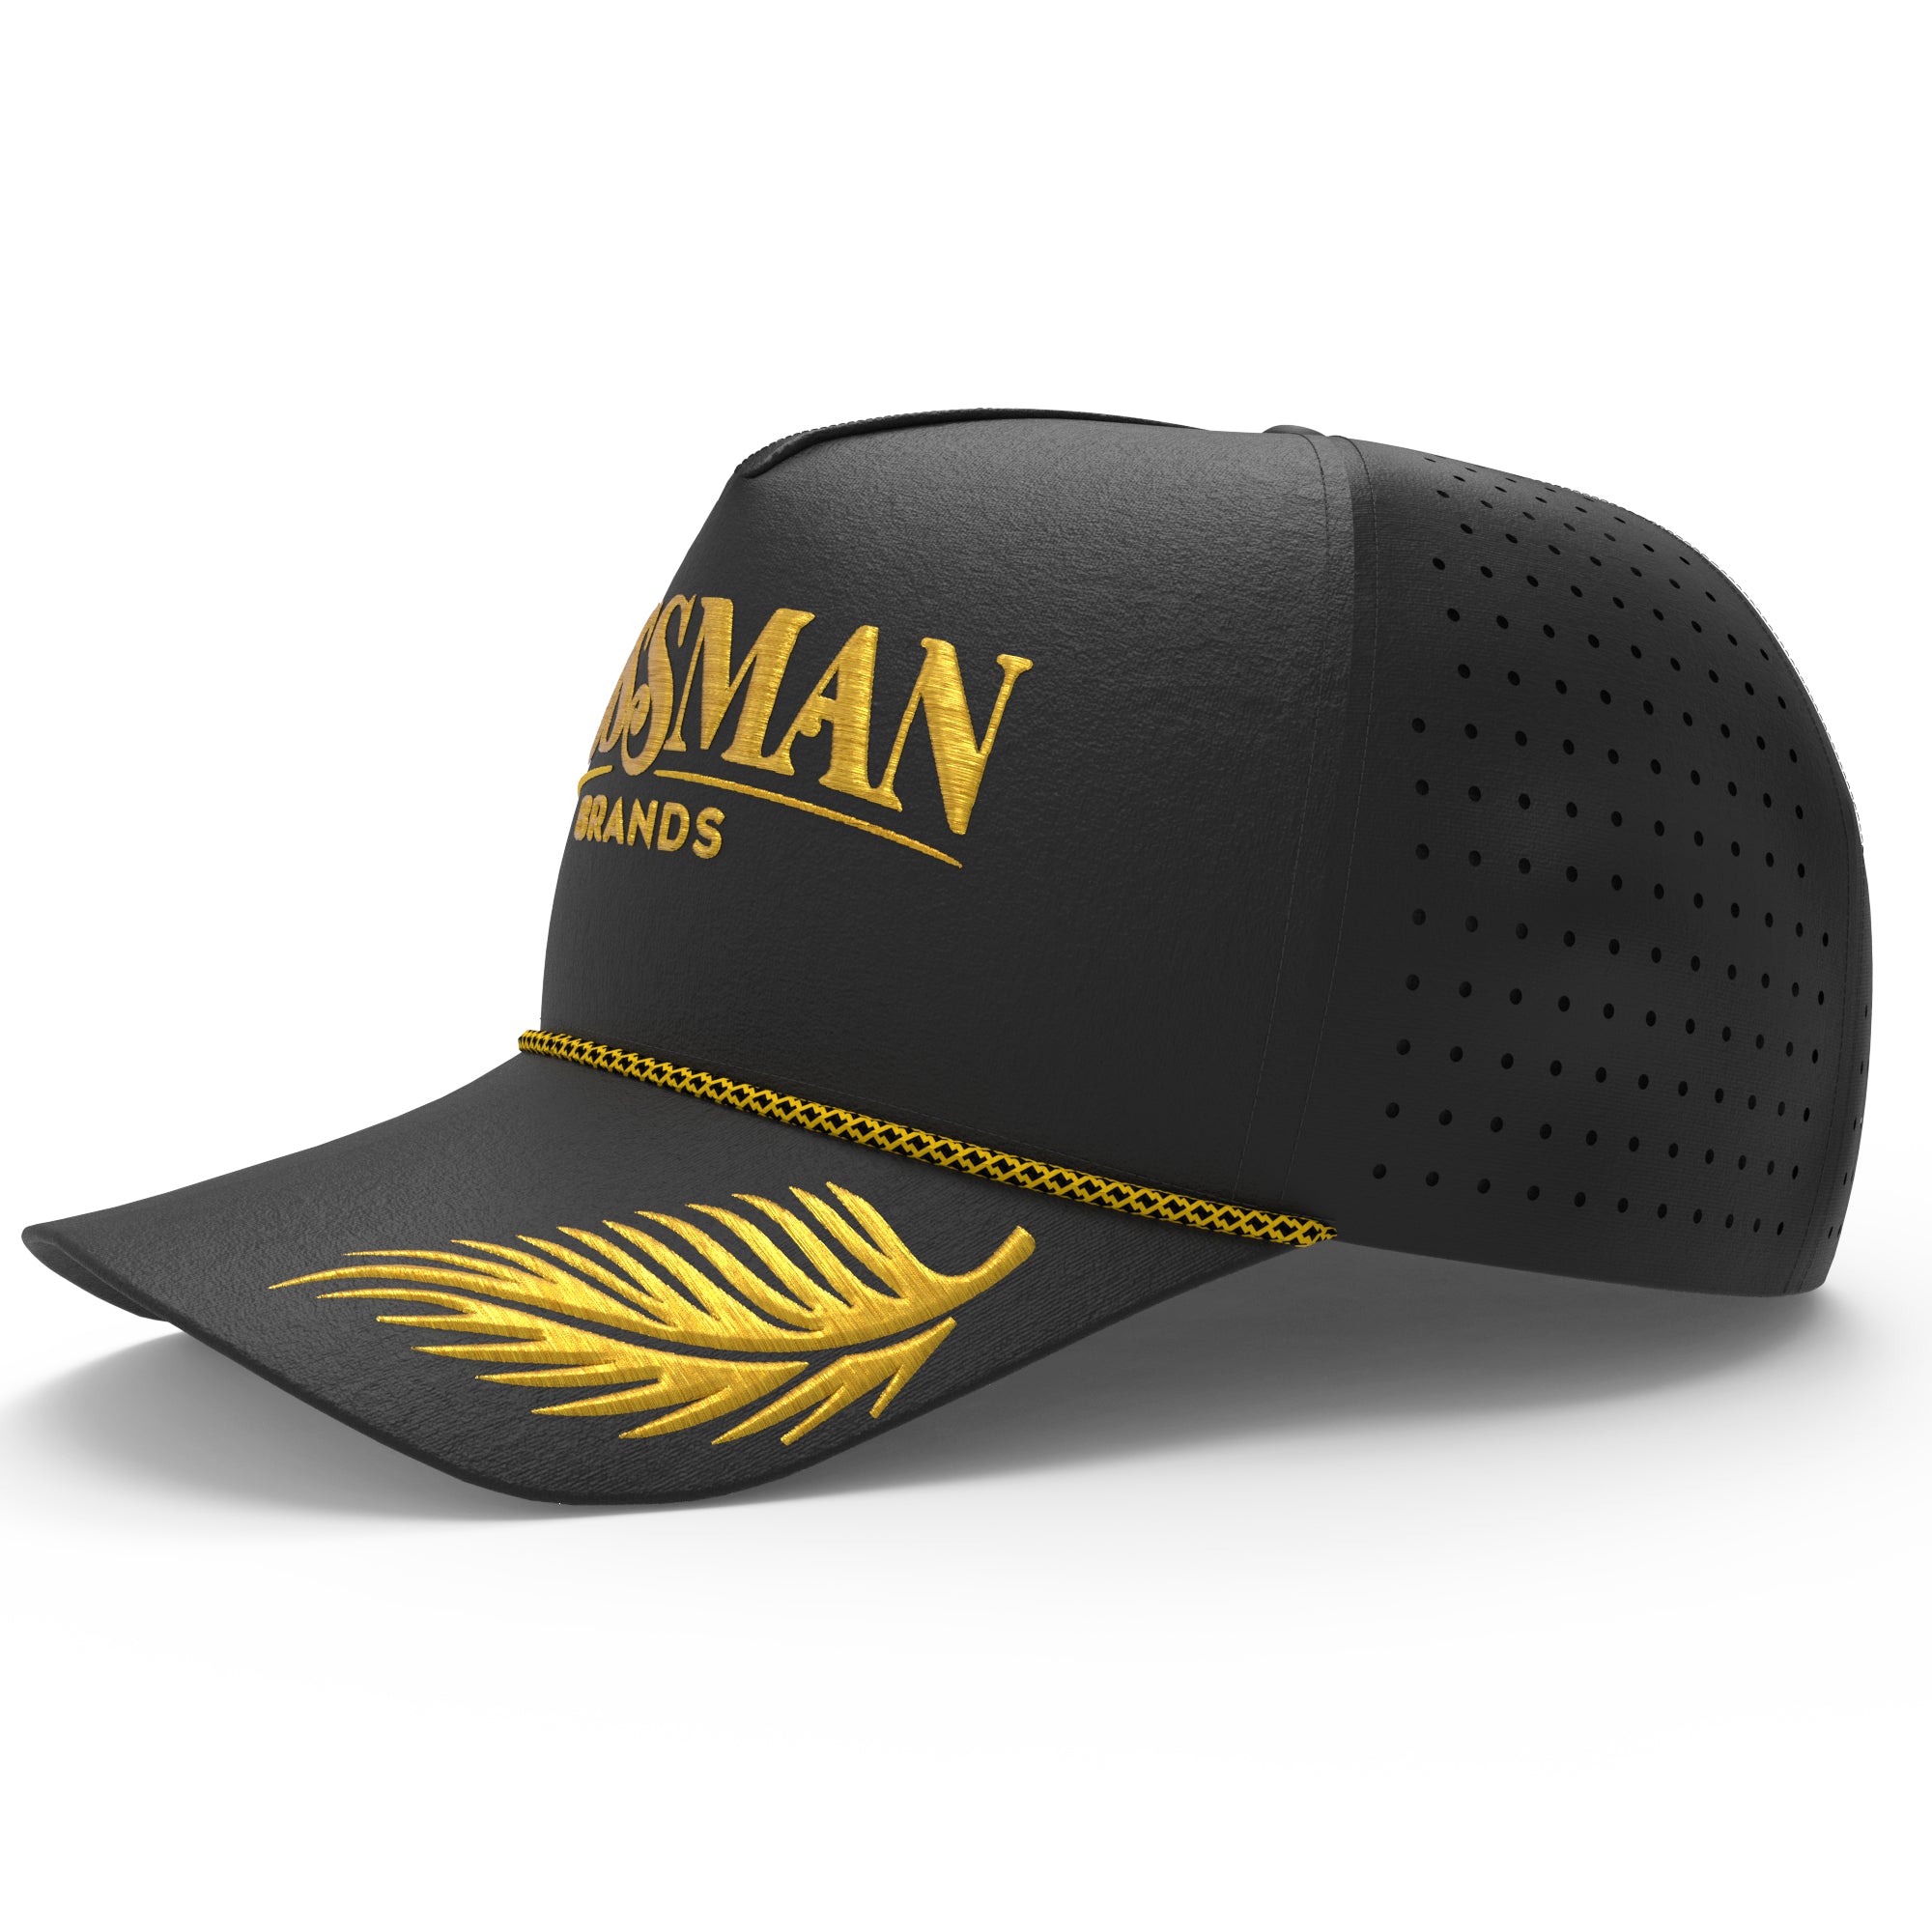 Bossman Water Resistant Trucker Style Golf Hat